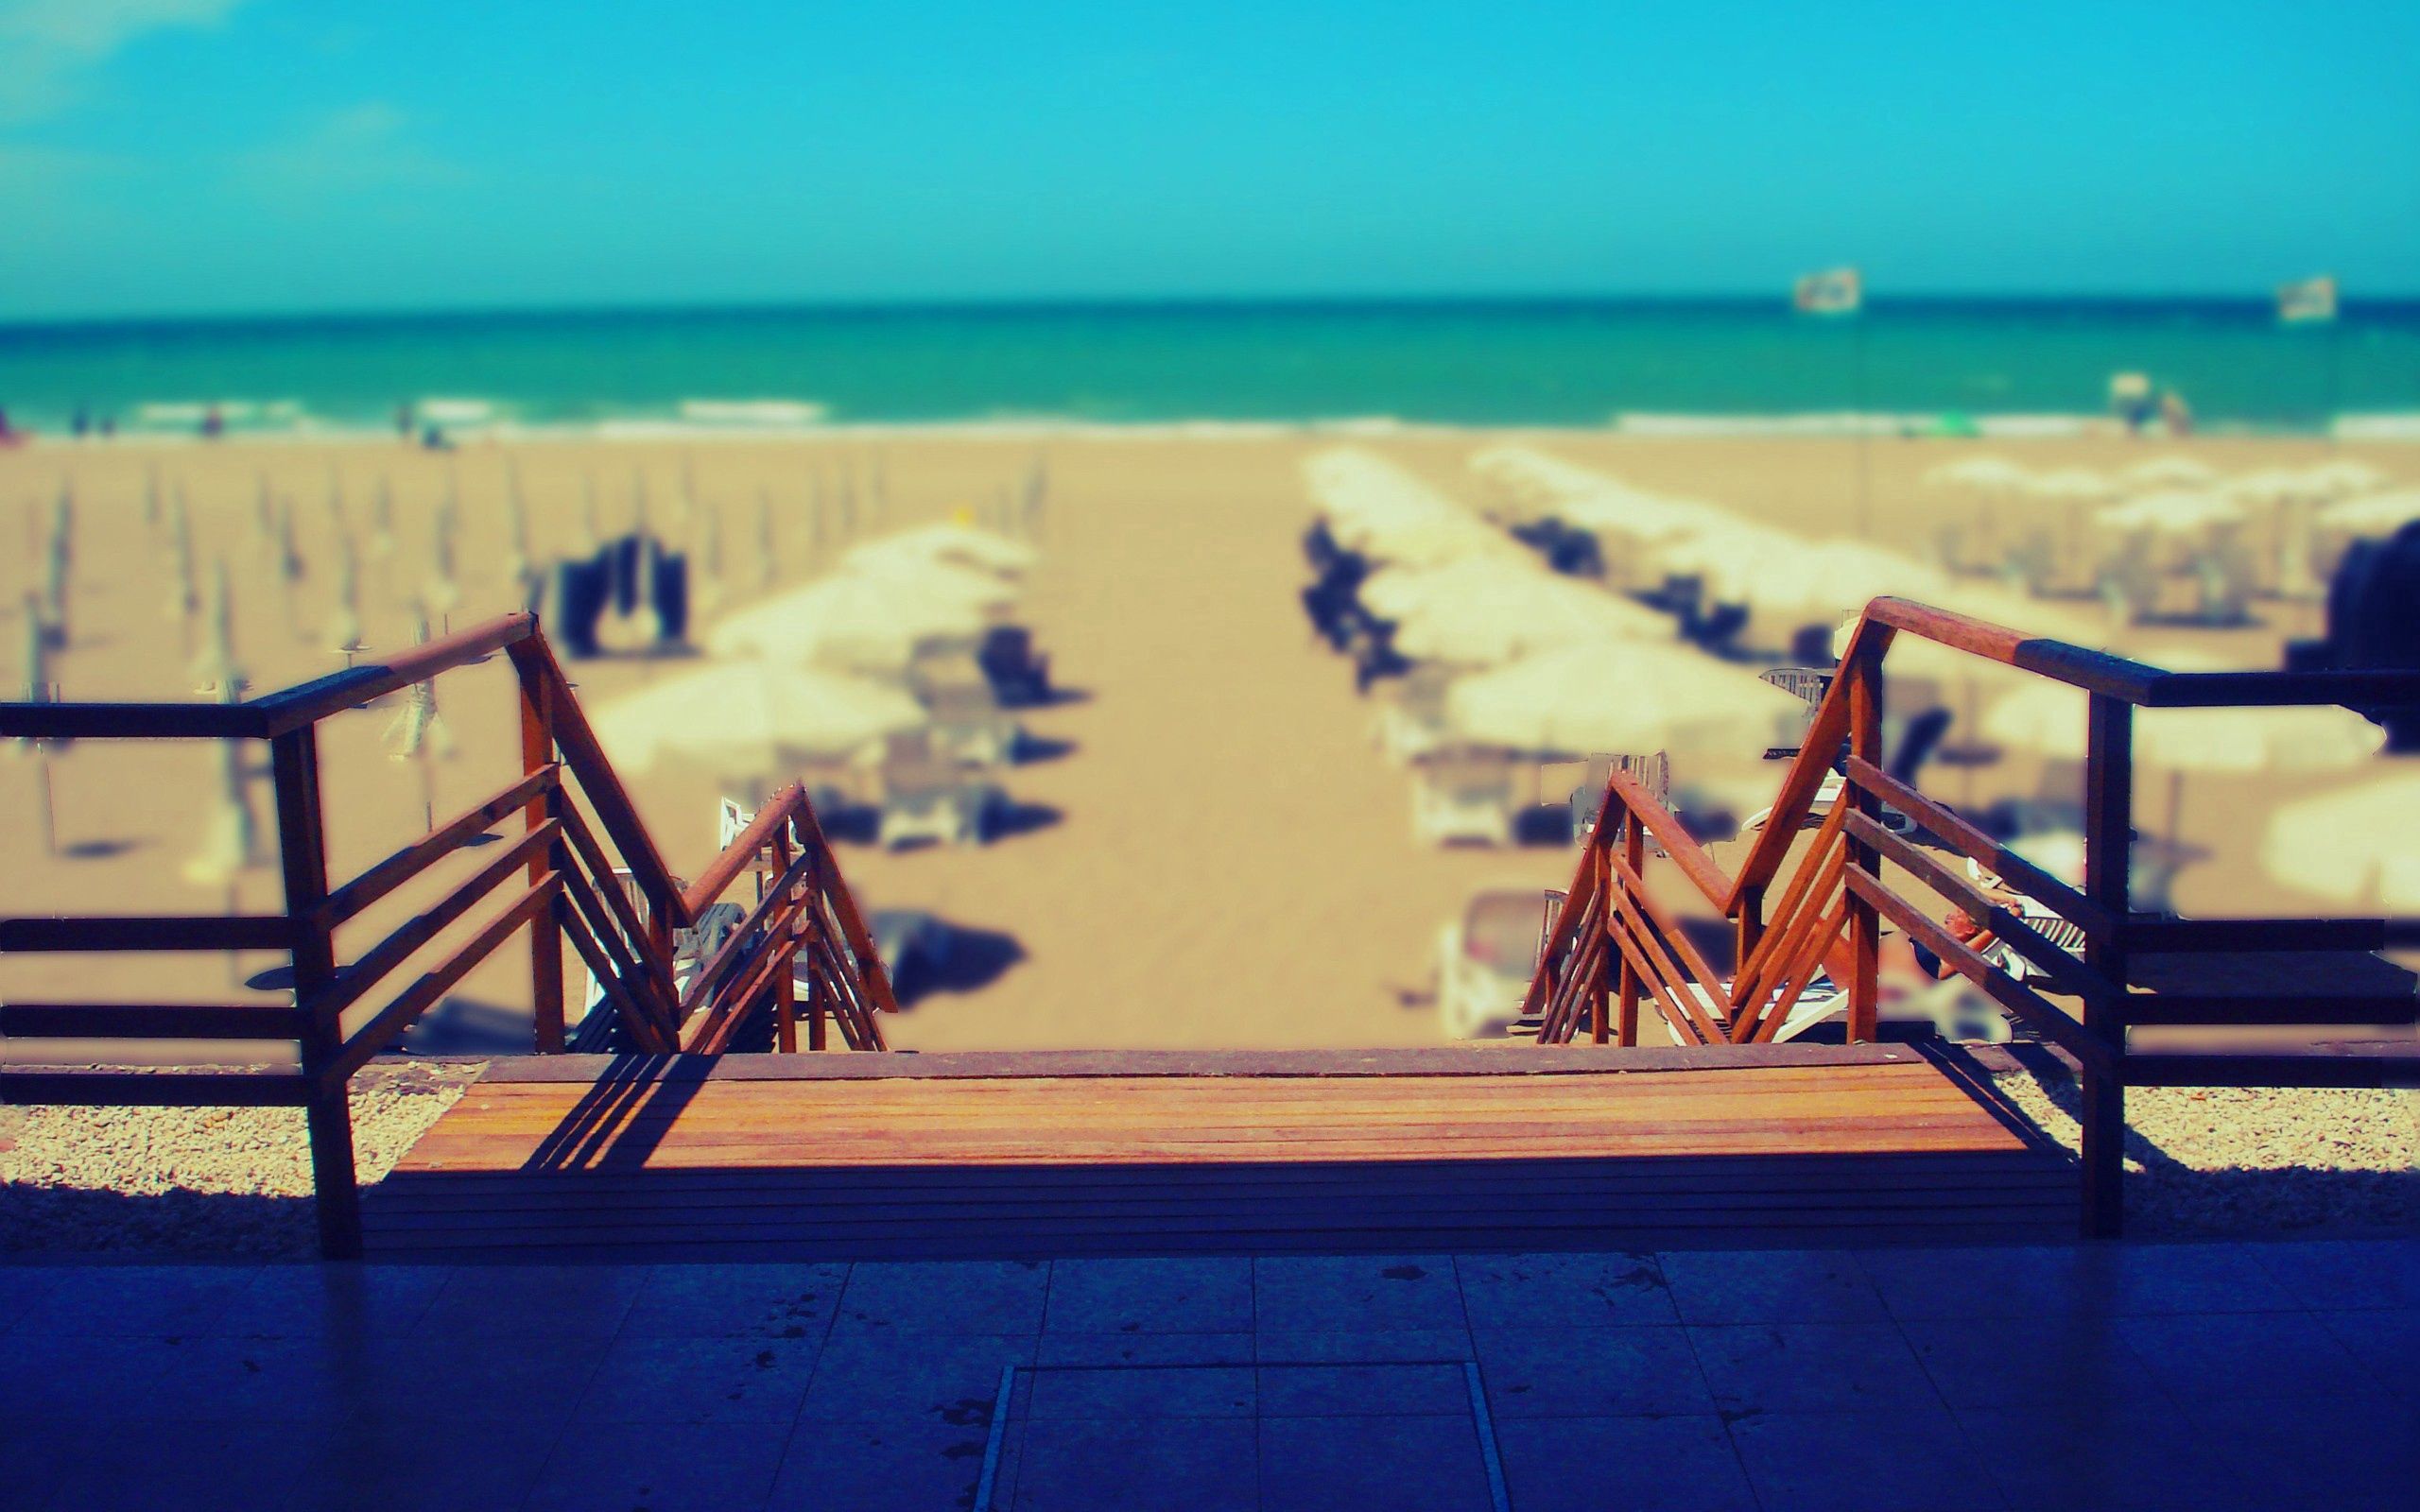 sun, beach, sand, miscellanea, miscellaneous, stairs, ladder, sun loungers, sun beds